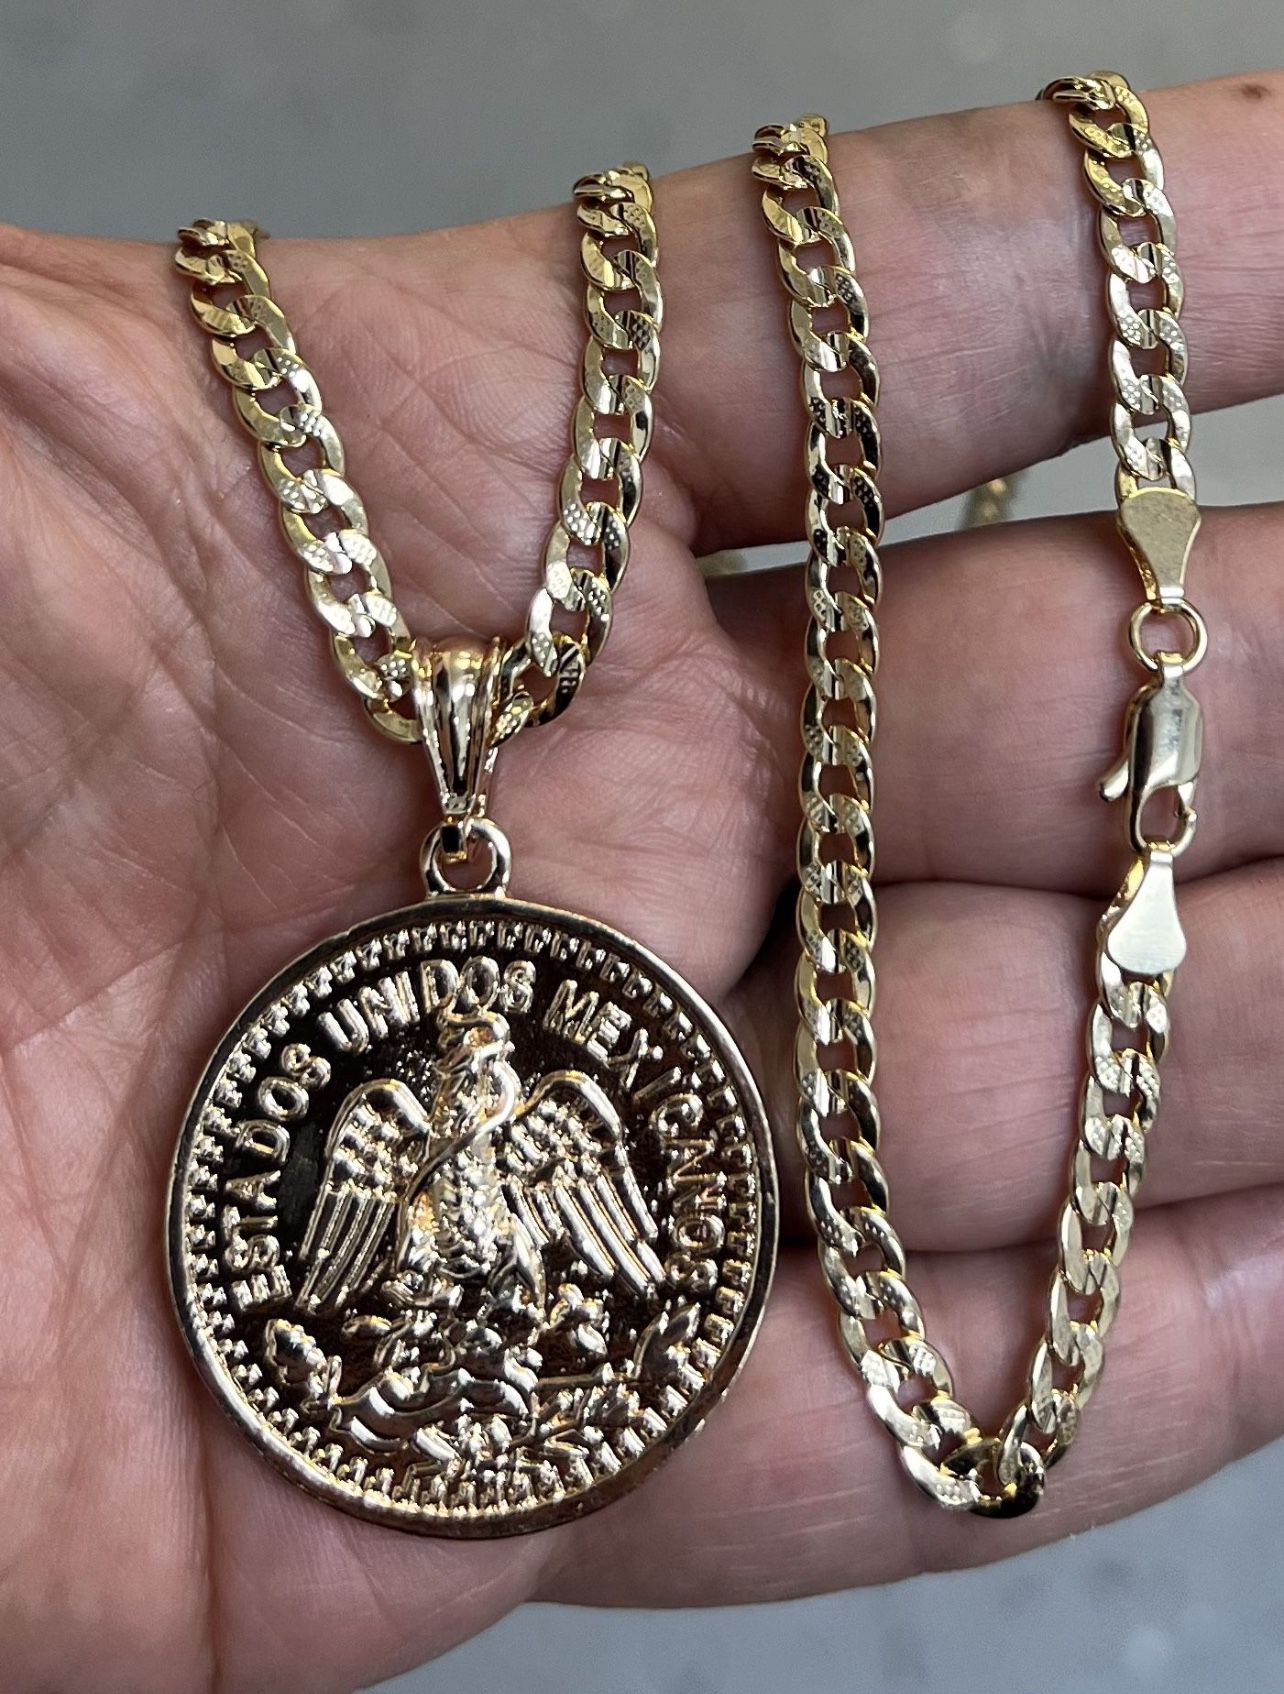 14k premium gold plated Saint Michael pendant and necklace